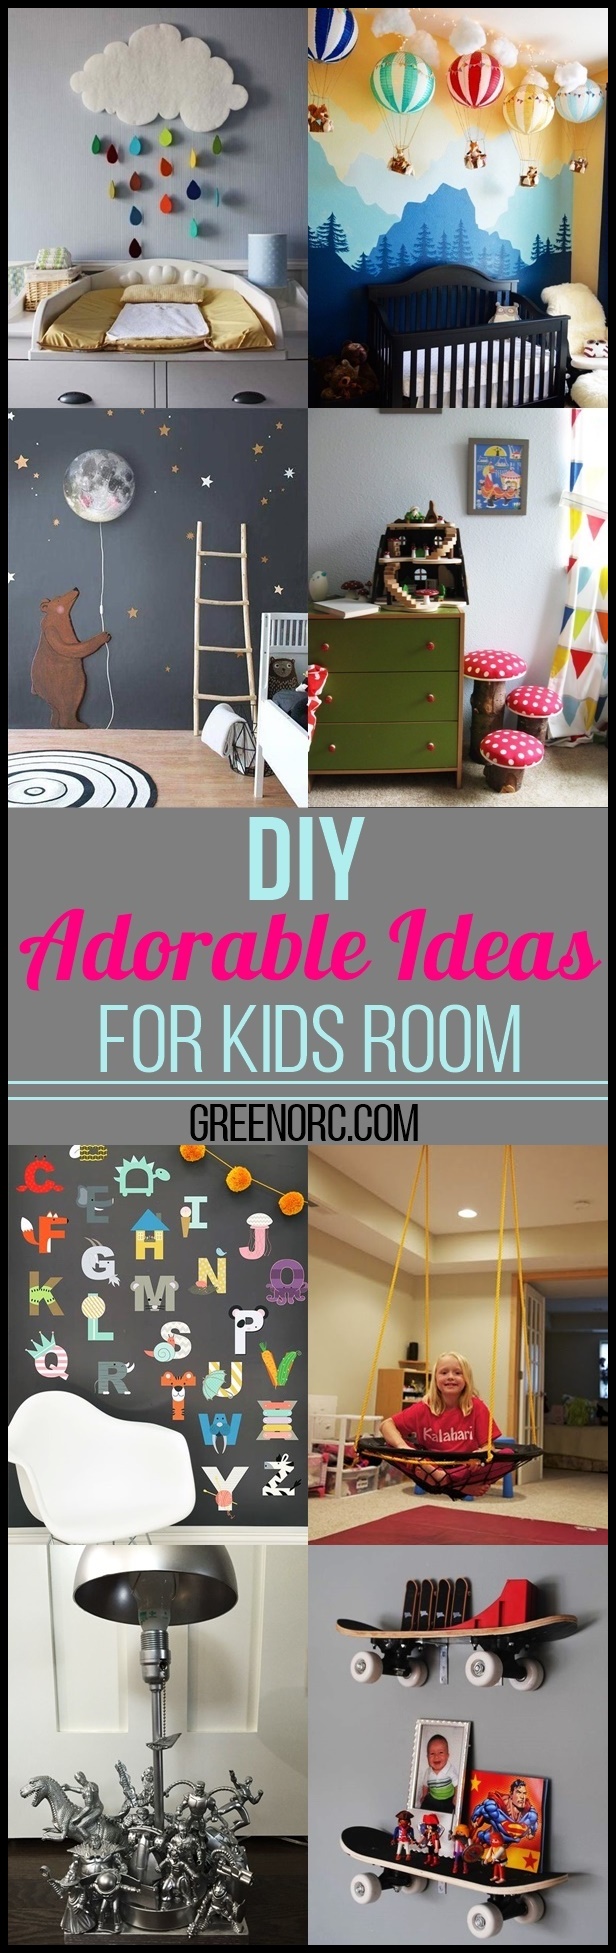 Diy Adorable Ideas for Kids Room